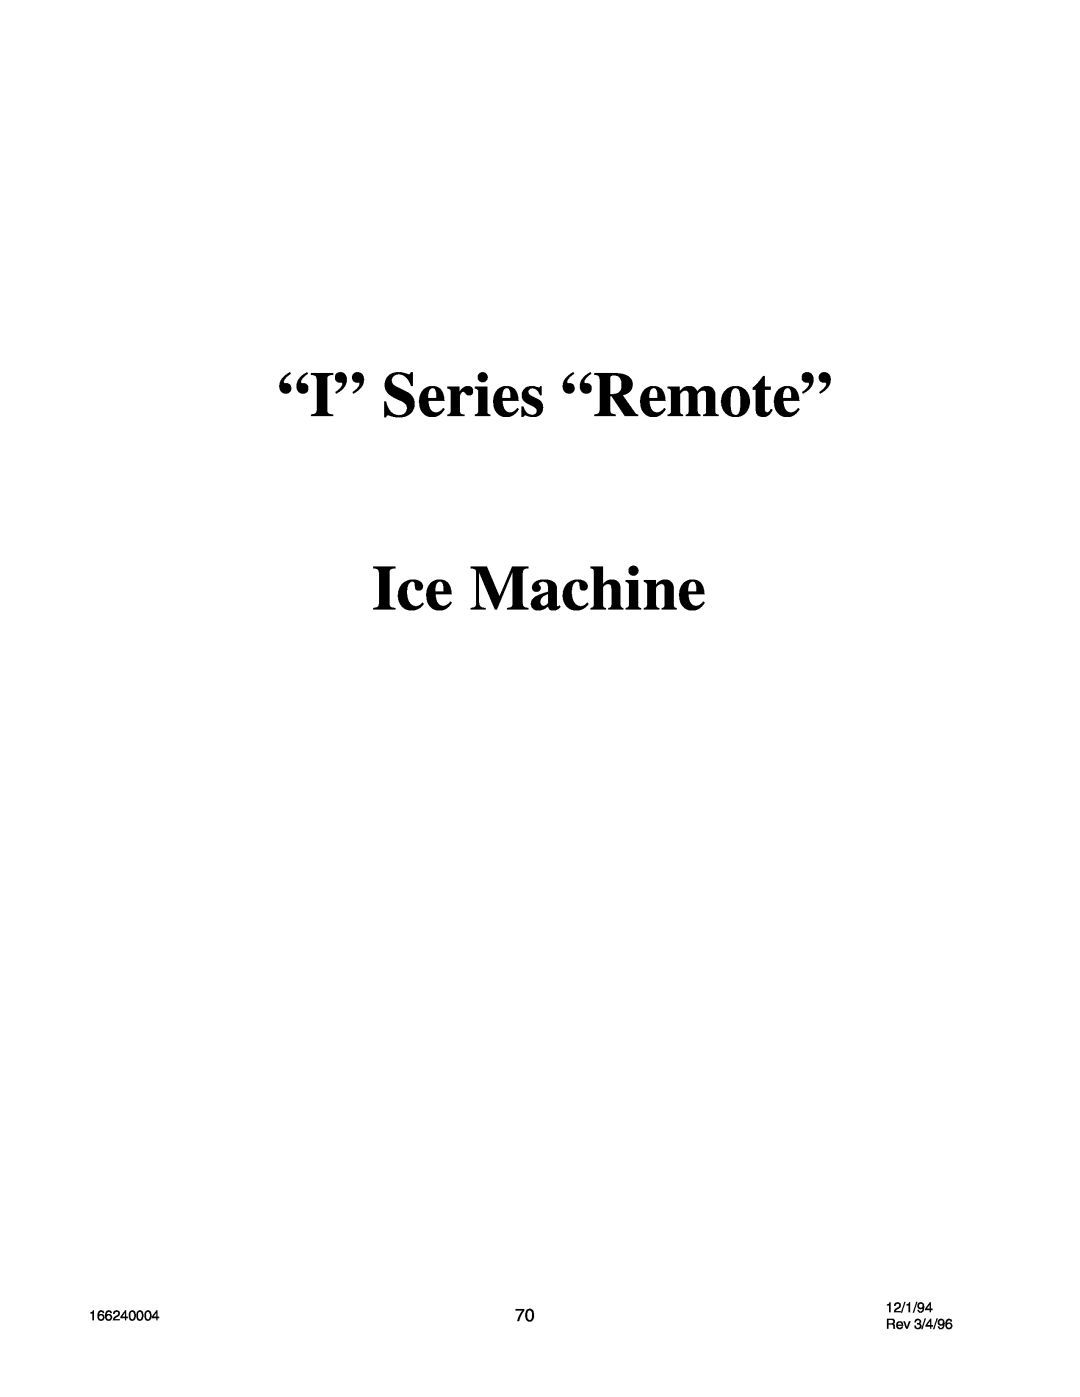 Cornelius IAC330, IAC 322, IAC227, CR800, CR1200, CR1400, IWC530, IWC330, IWC322 “I” Series “Remote”, Ice Machine, Rev 3/4/96 